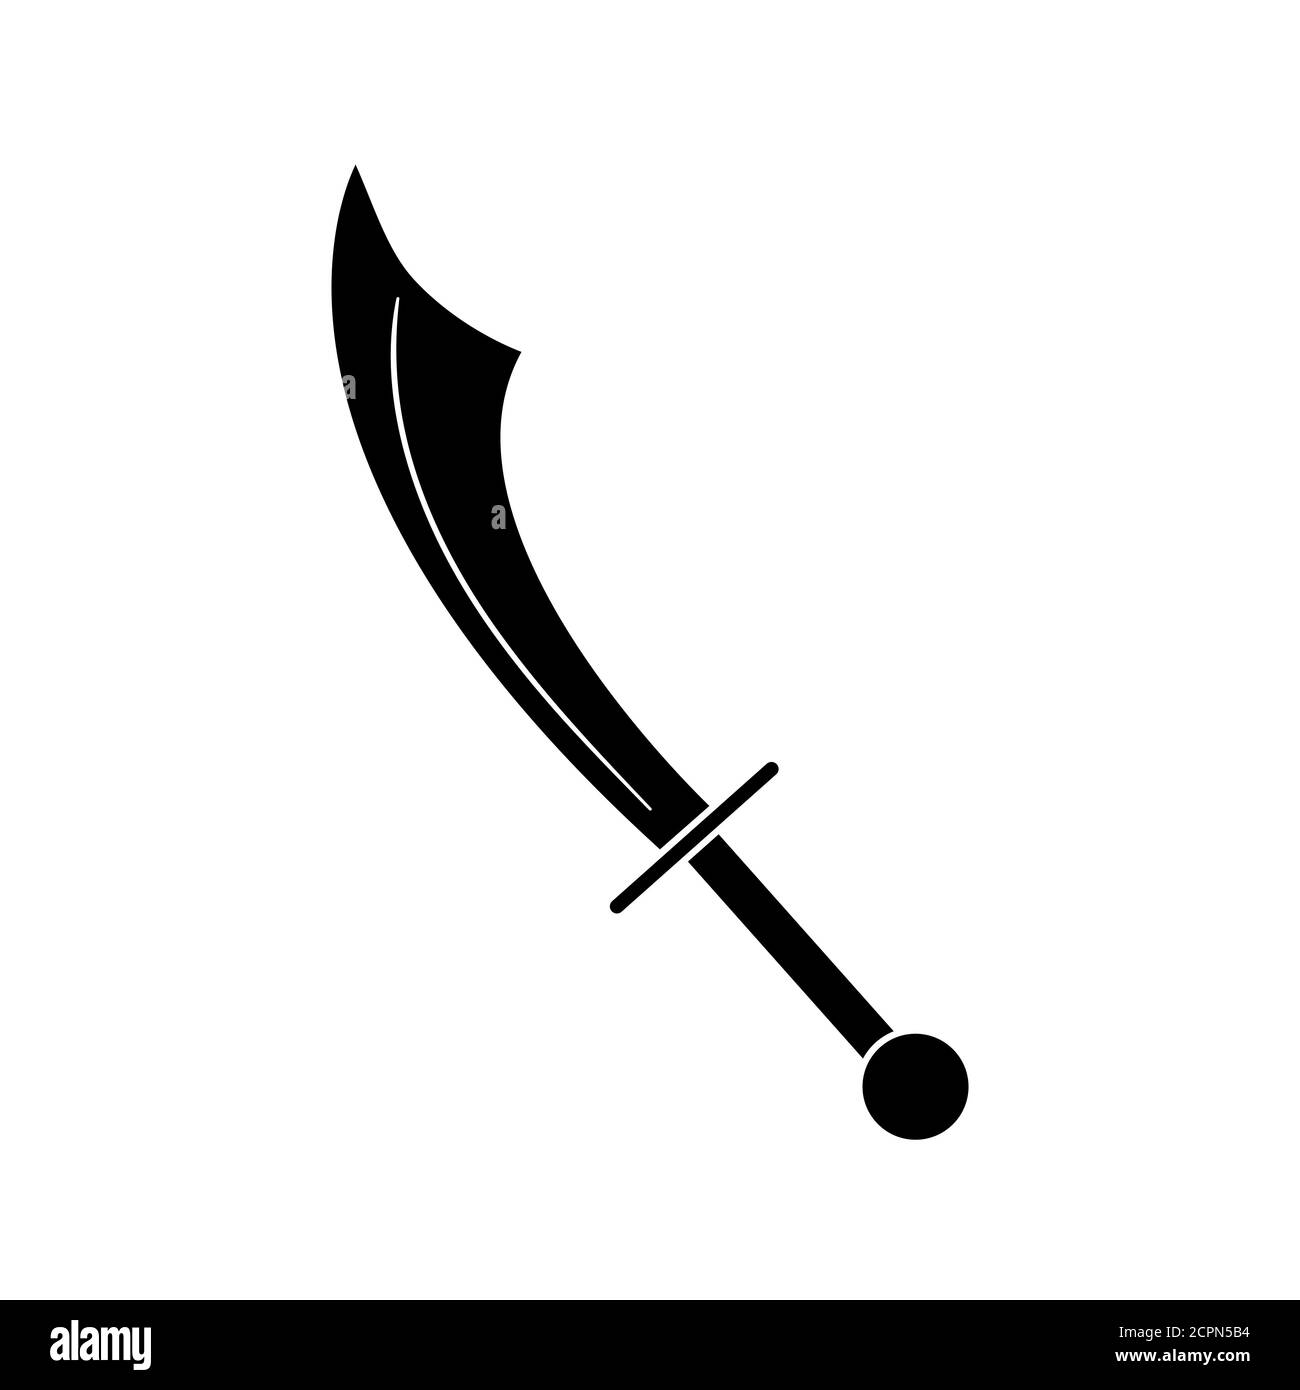 Arabic sword in trendy flat style isolated. Stock Vector illustration. Stock Vector